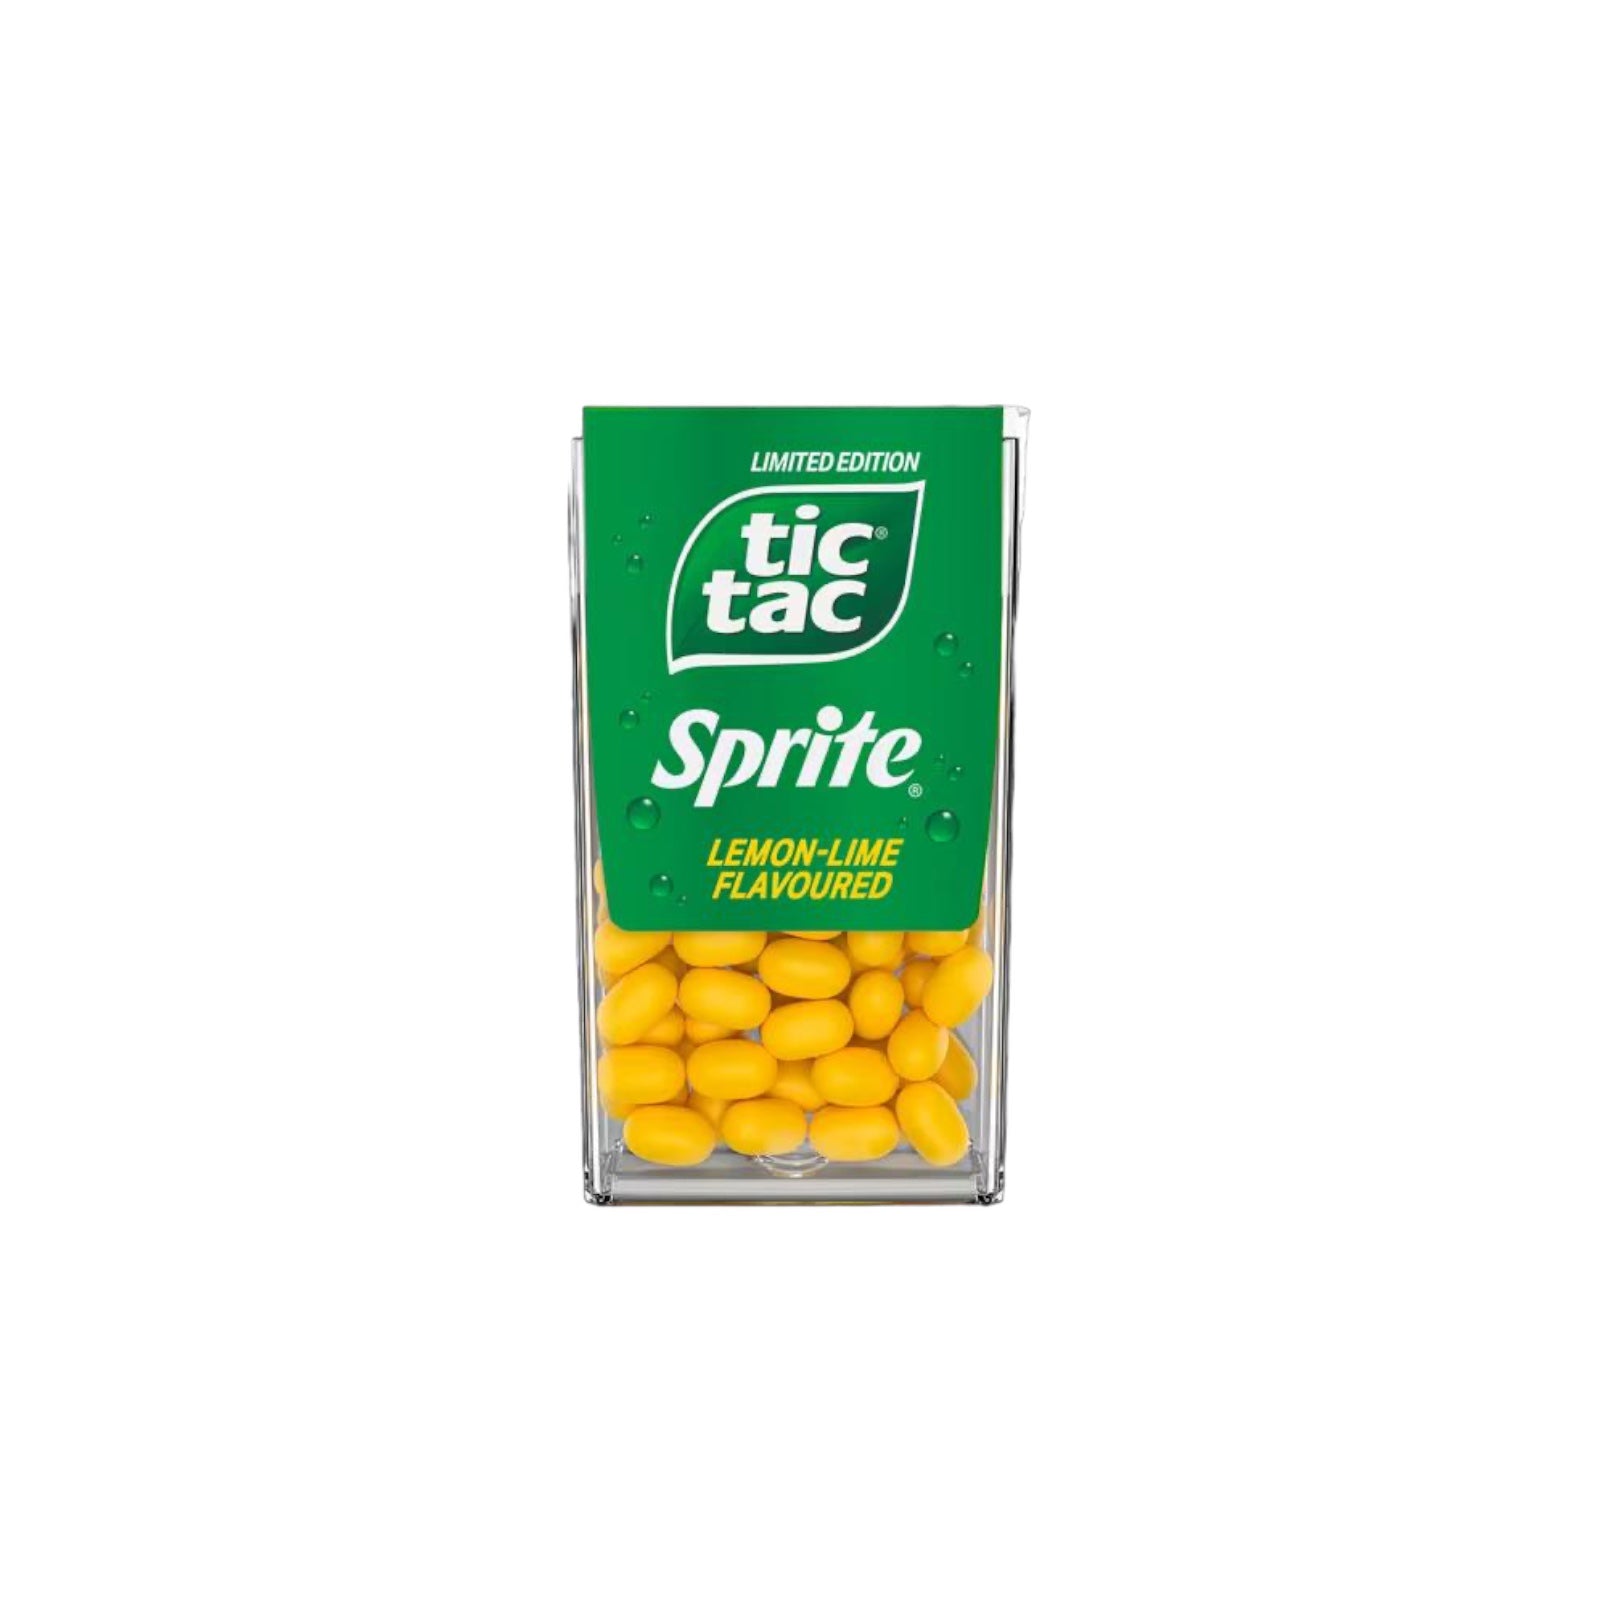 Tic Tac Sprite Limited Edition 
Lemon Lime Flavor